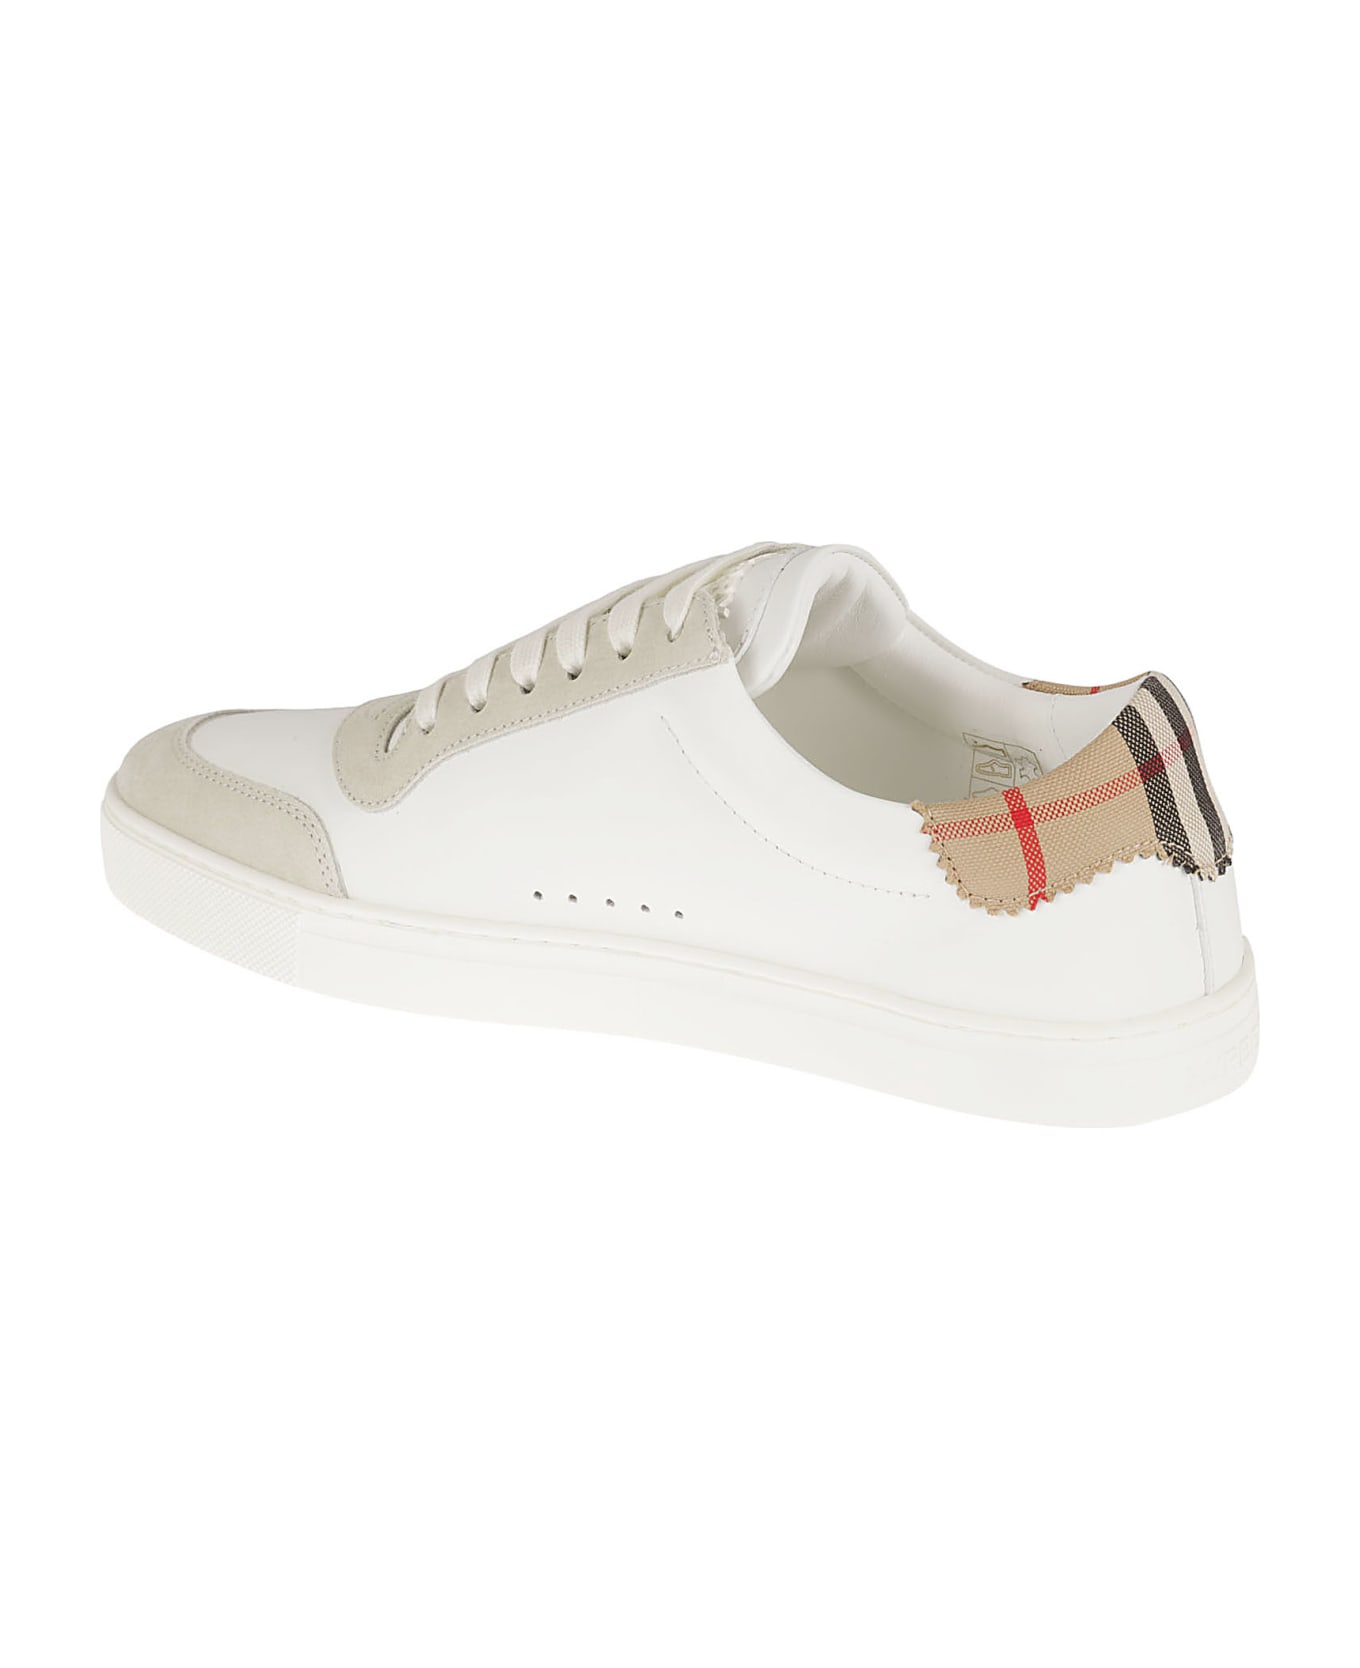 Burberry Robin Sneakers - Neutral White スニーカー